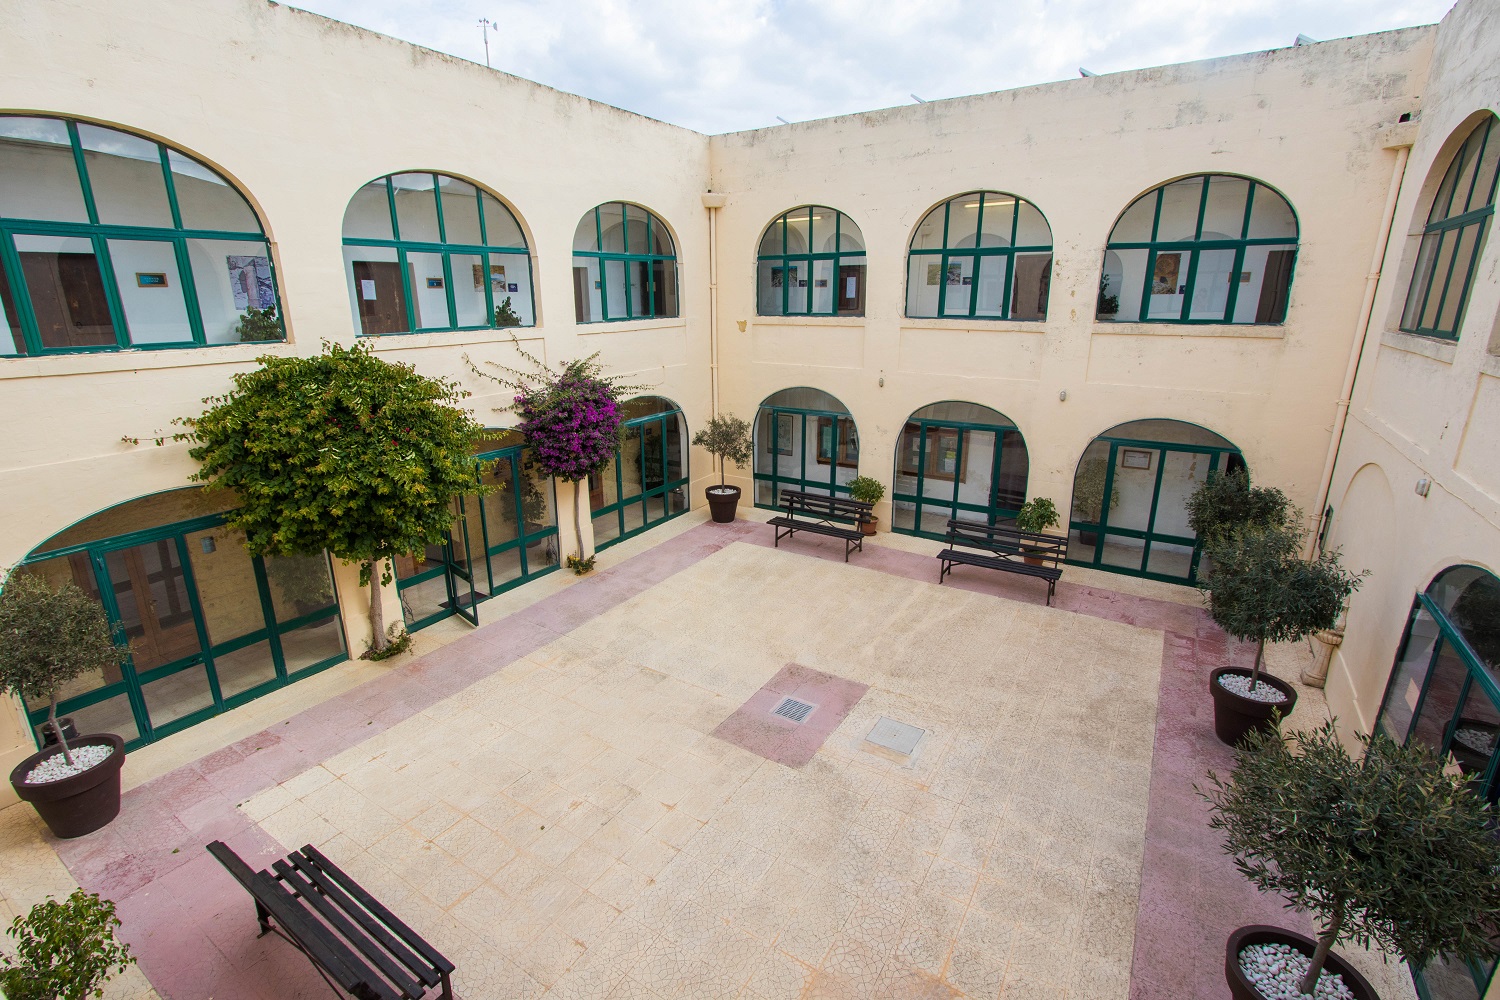 Open Internal Courtyard at University of Malta Gozo Campus